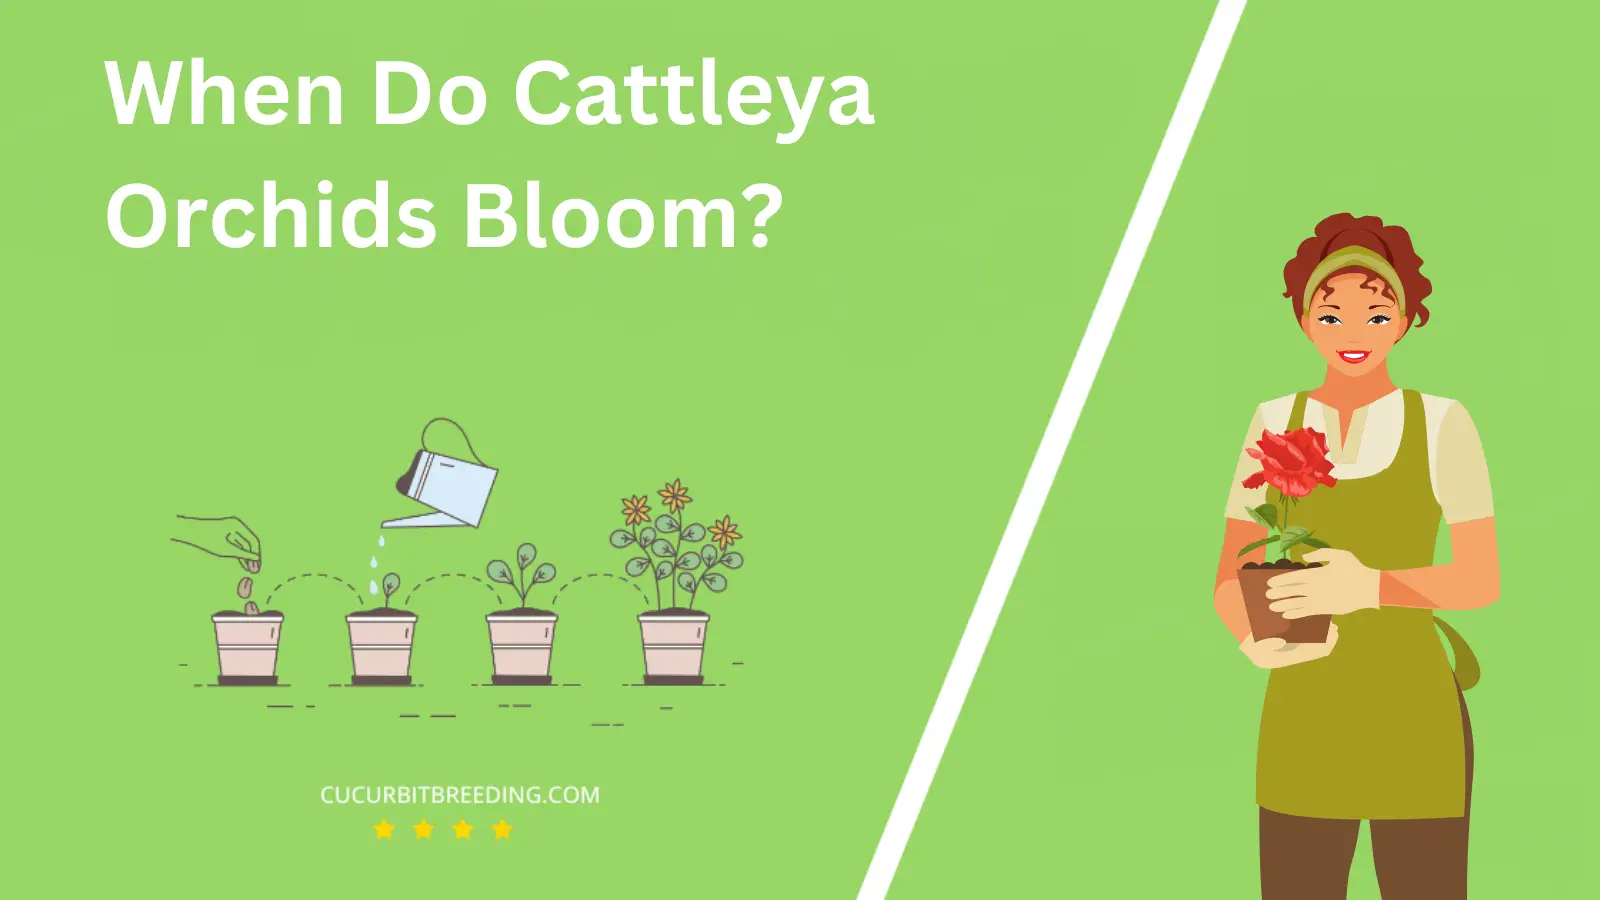 When Do Cattleya Orchids Bloom?